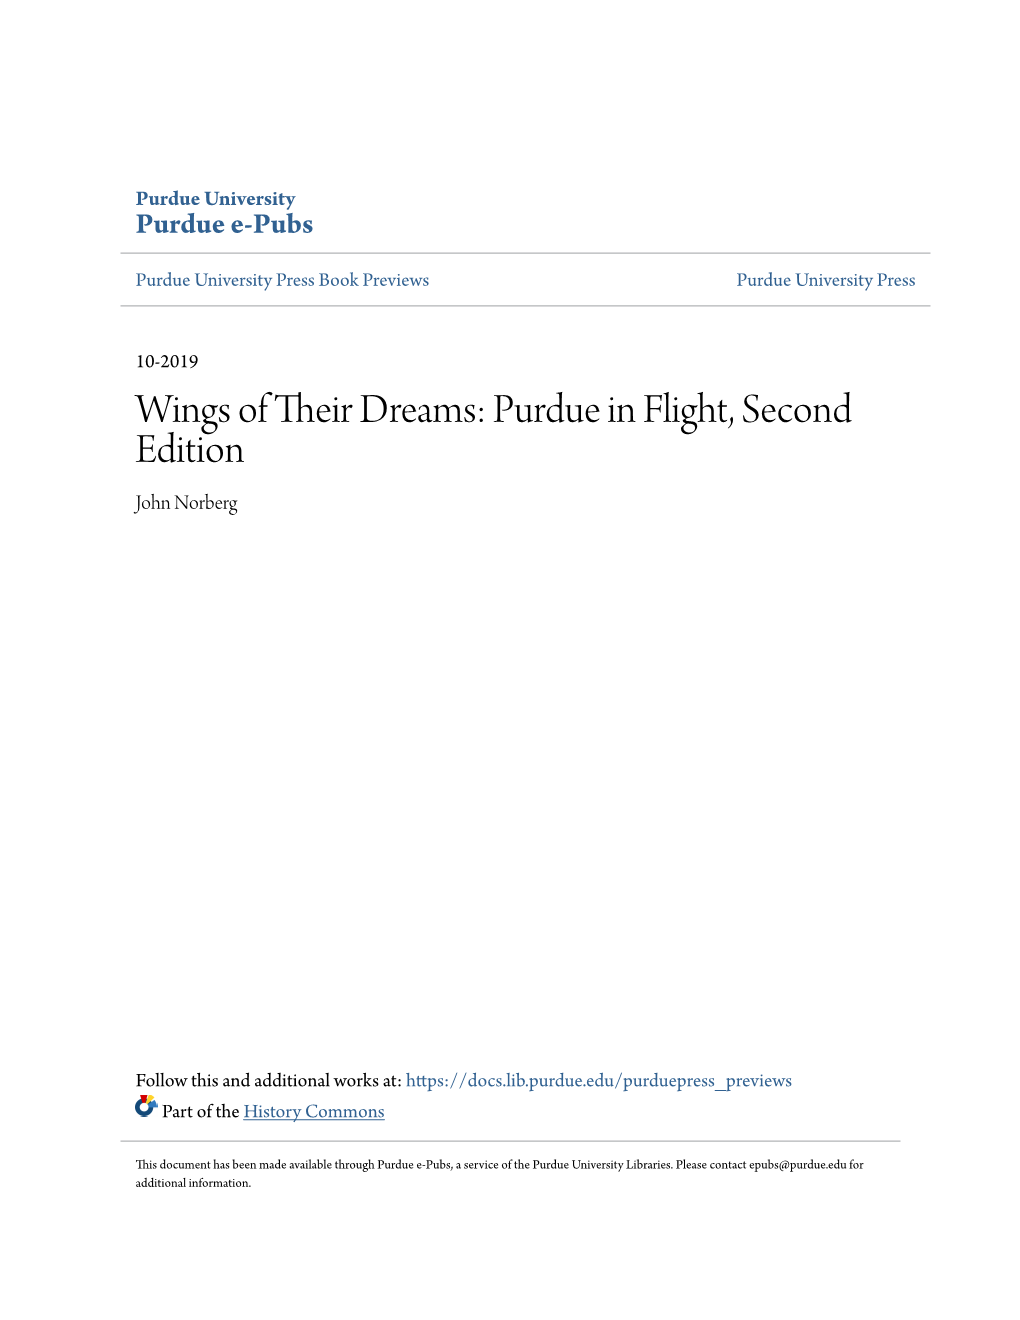 Wings of Their Dreams: Purdue in Flight, Second Edition John Norberg